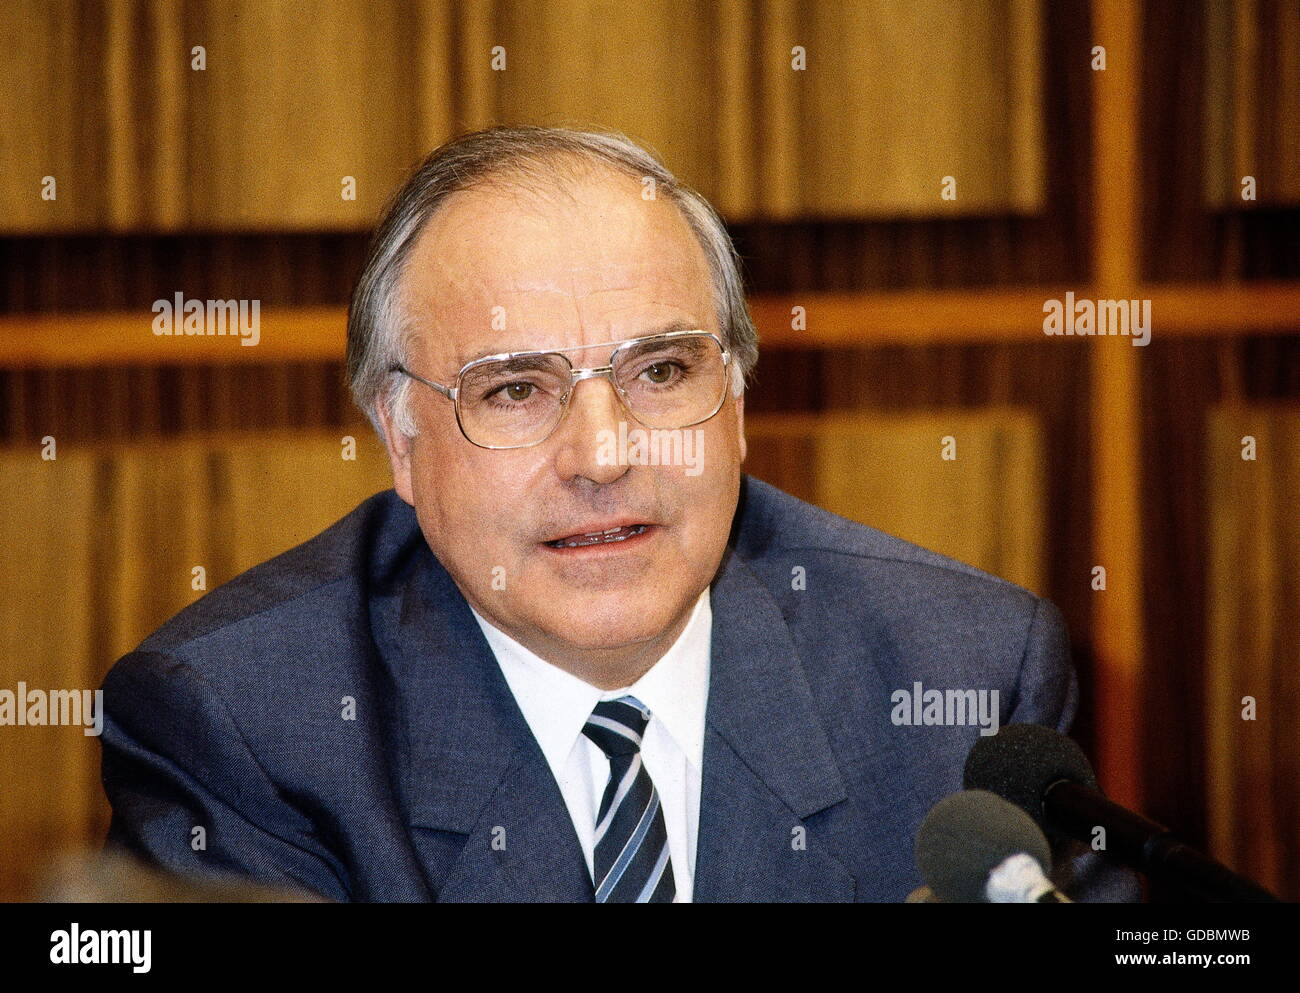 Kohl, Helmut, * 3.4.1930, German politician (CDU), chancellor of Germany 1982 - 1998, portrait, 1980s, Stock Photo